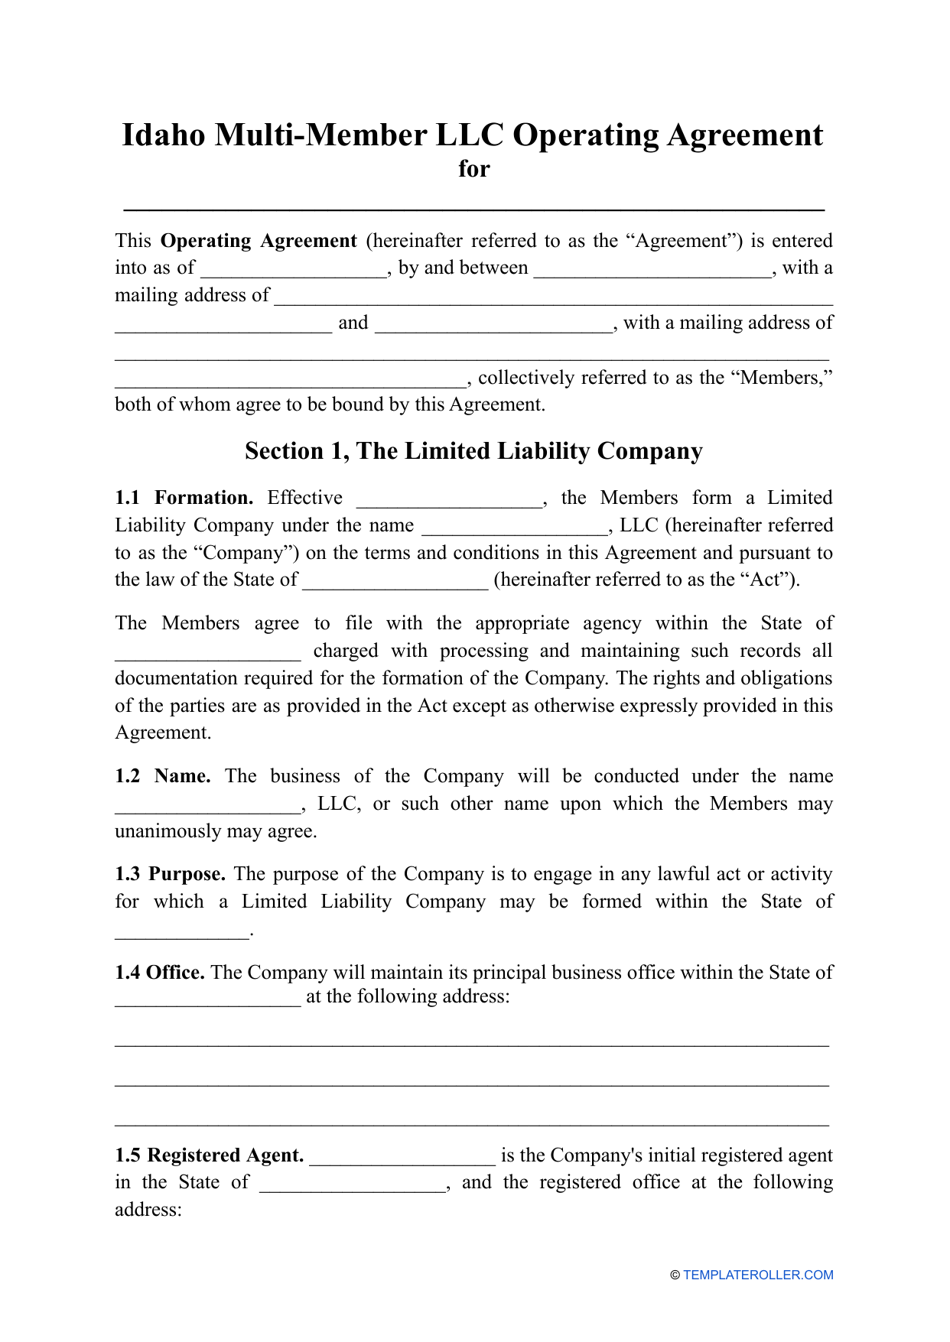 Multi-Member LLC Operating Agreement Template - Idaho, Page 1